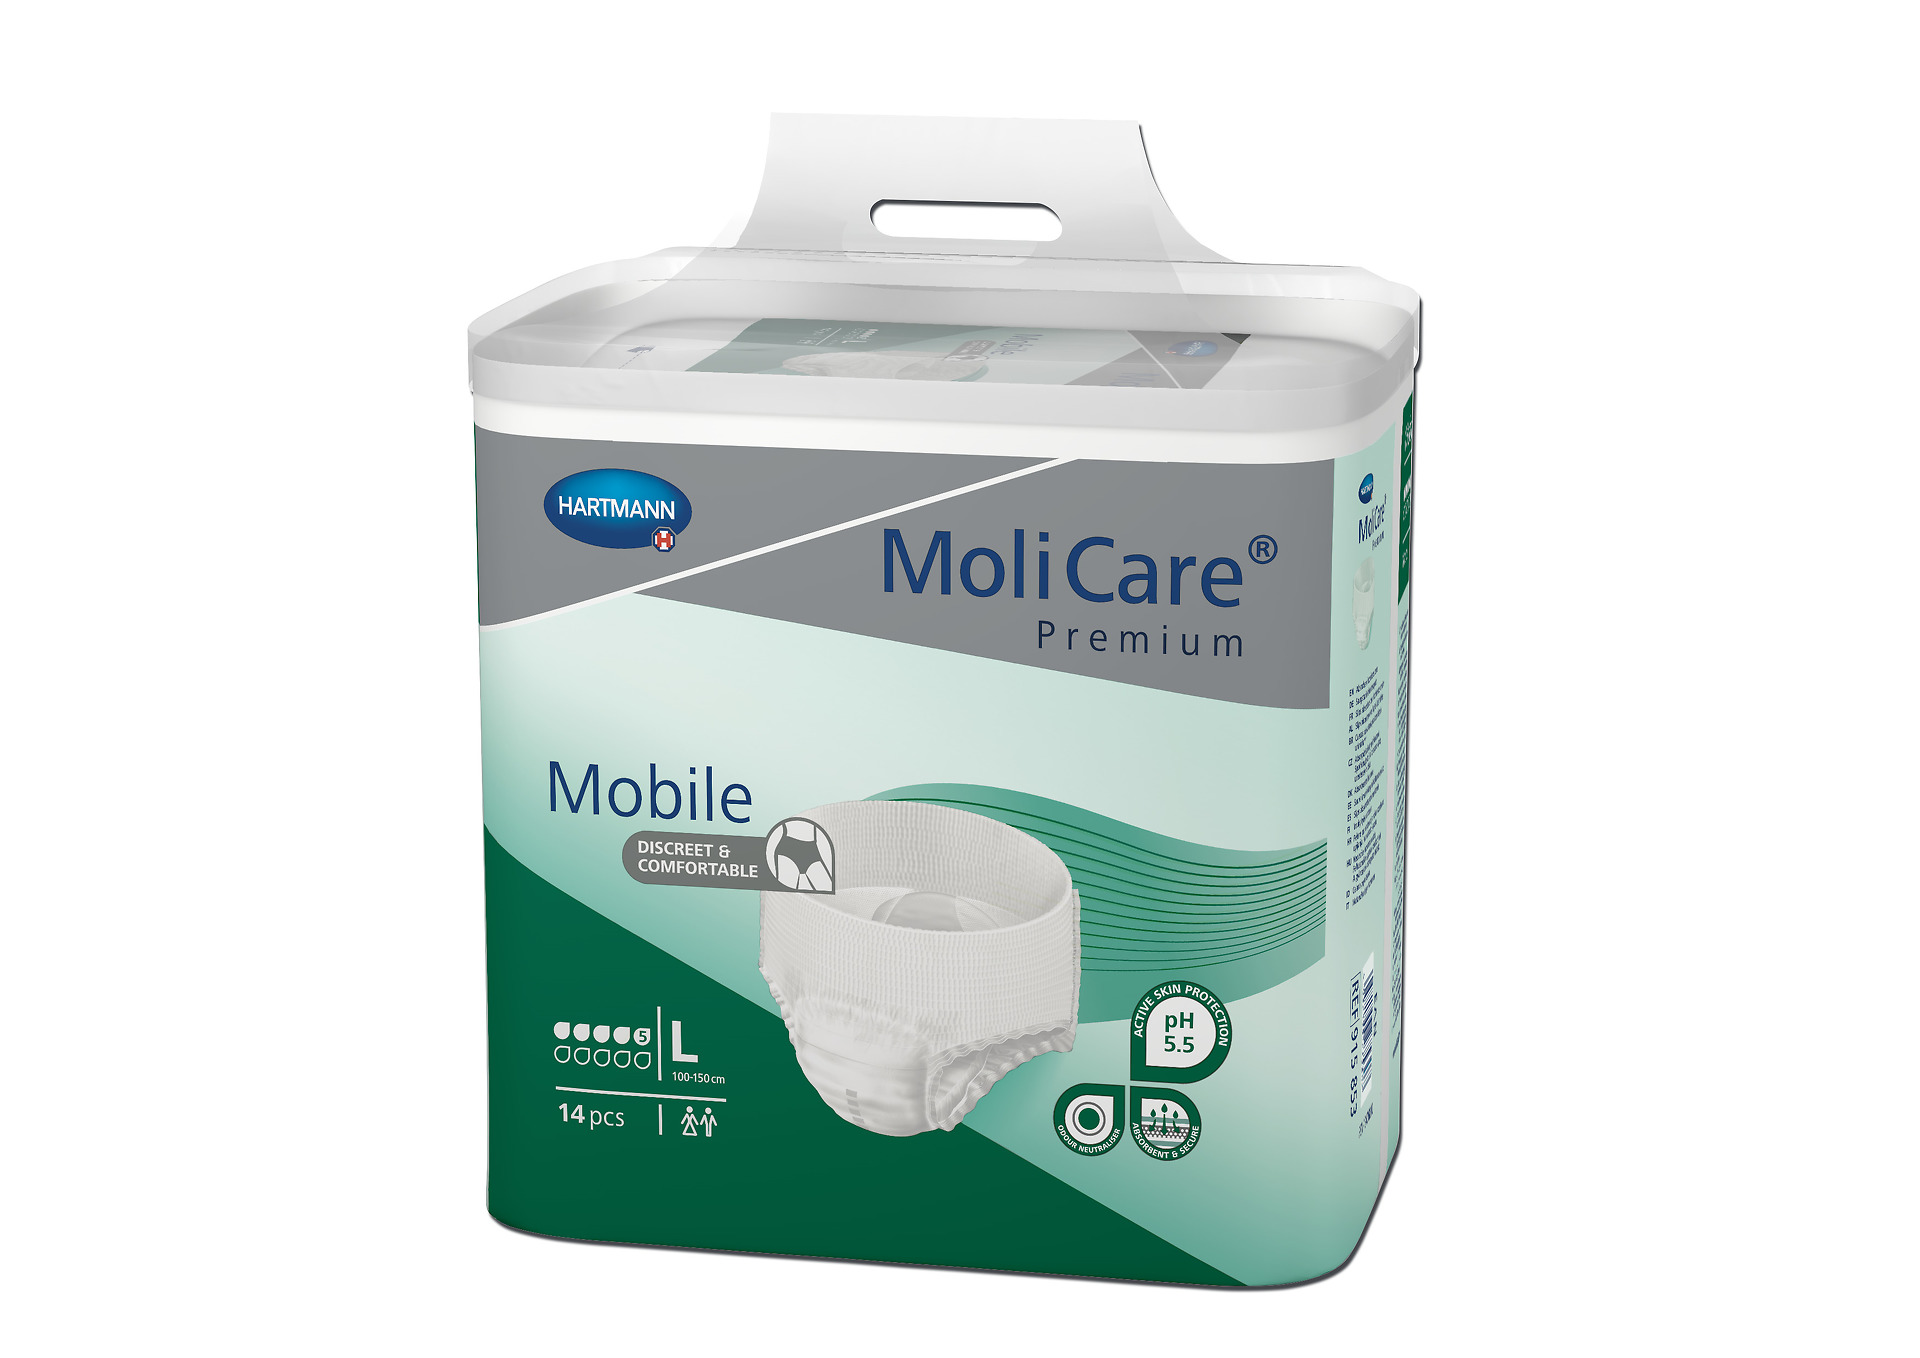 Paul-Hartmann - MoliCare® Premium Mobile Inkontinenzhosen, 5 Tropfen - Expert Medizinbedarf